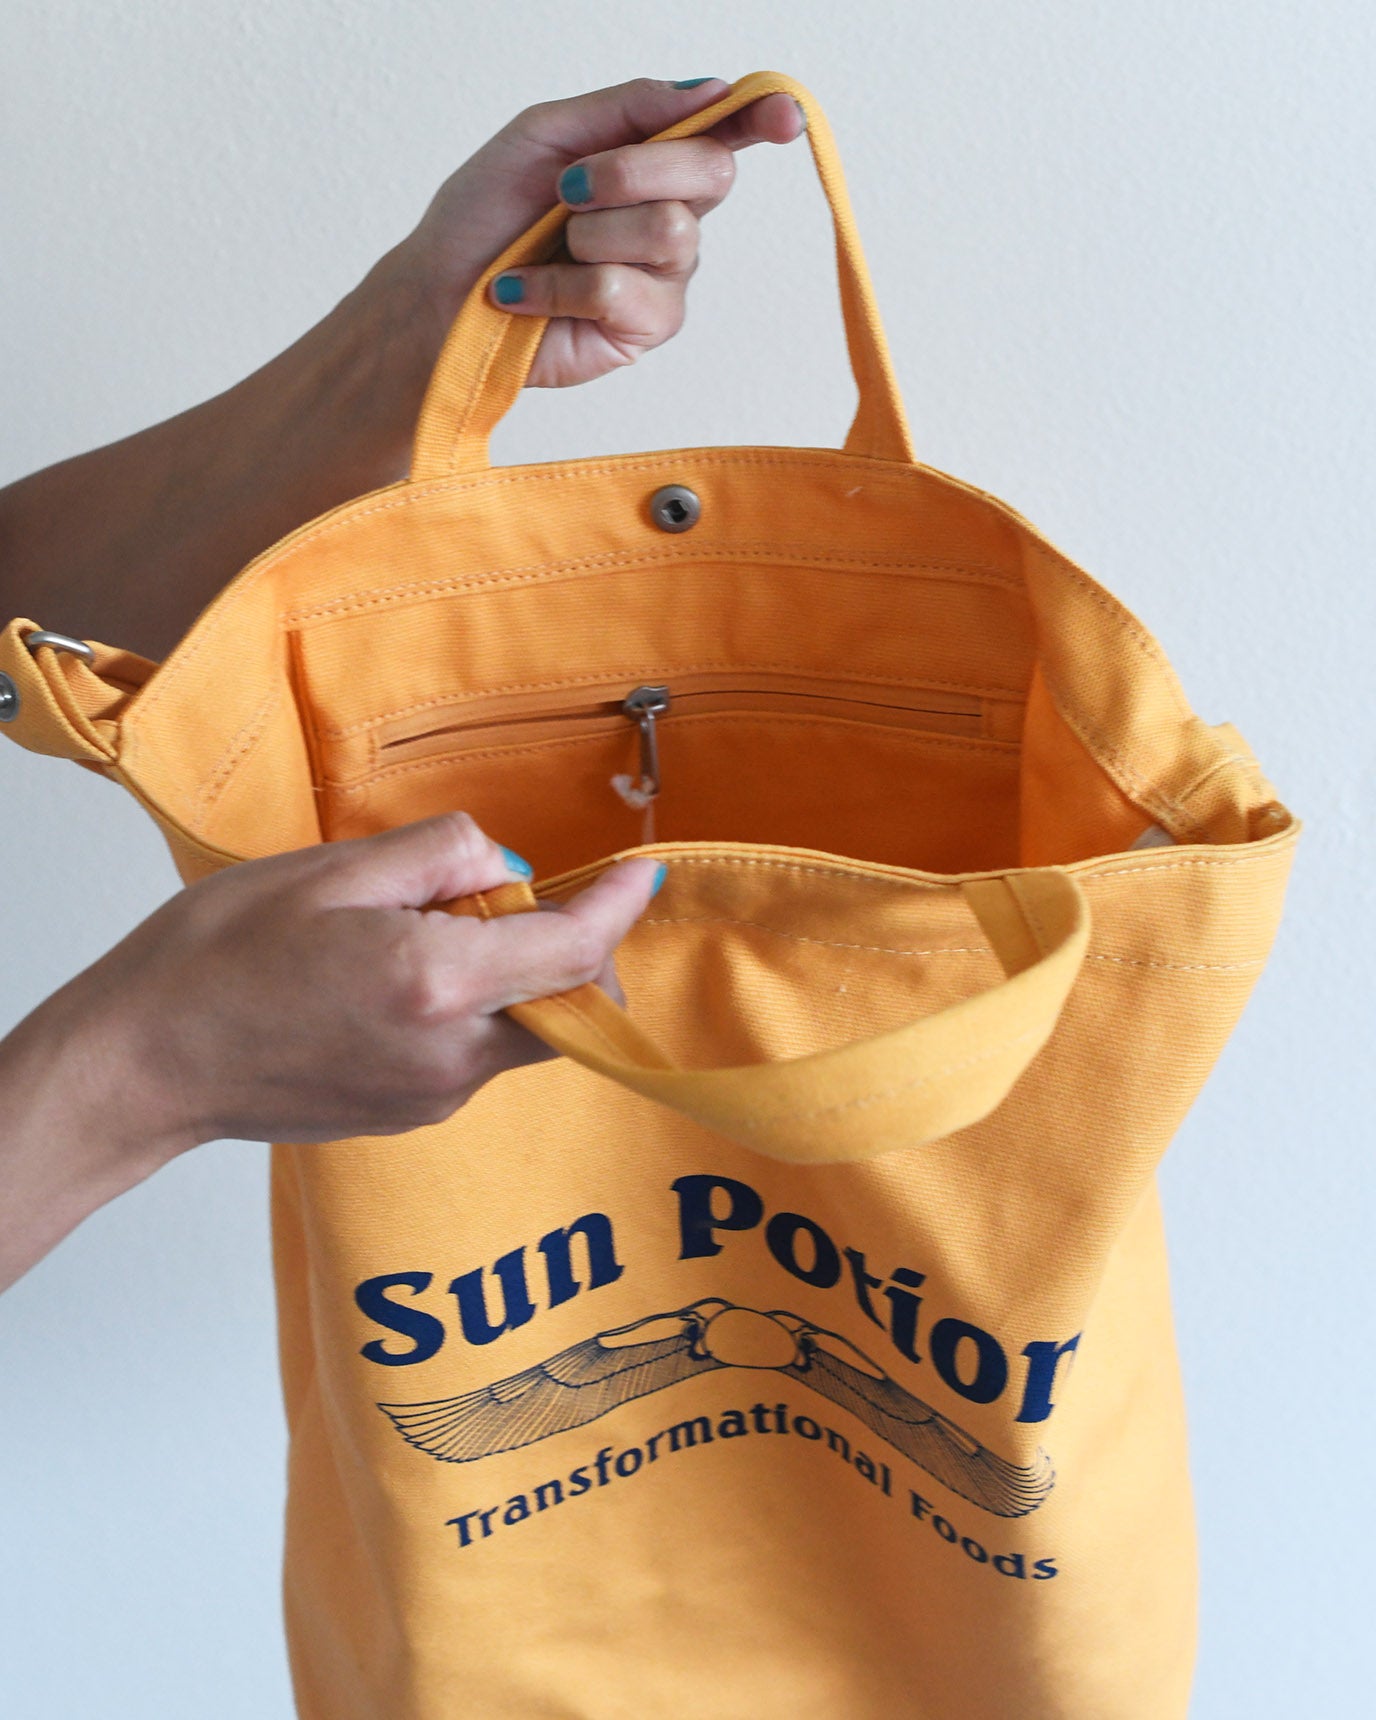 Sun Potion Summer Tote (100% Cotton)